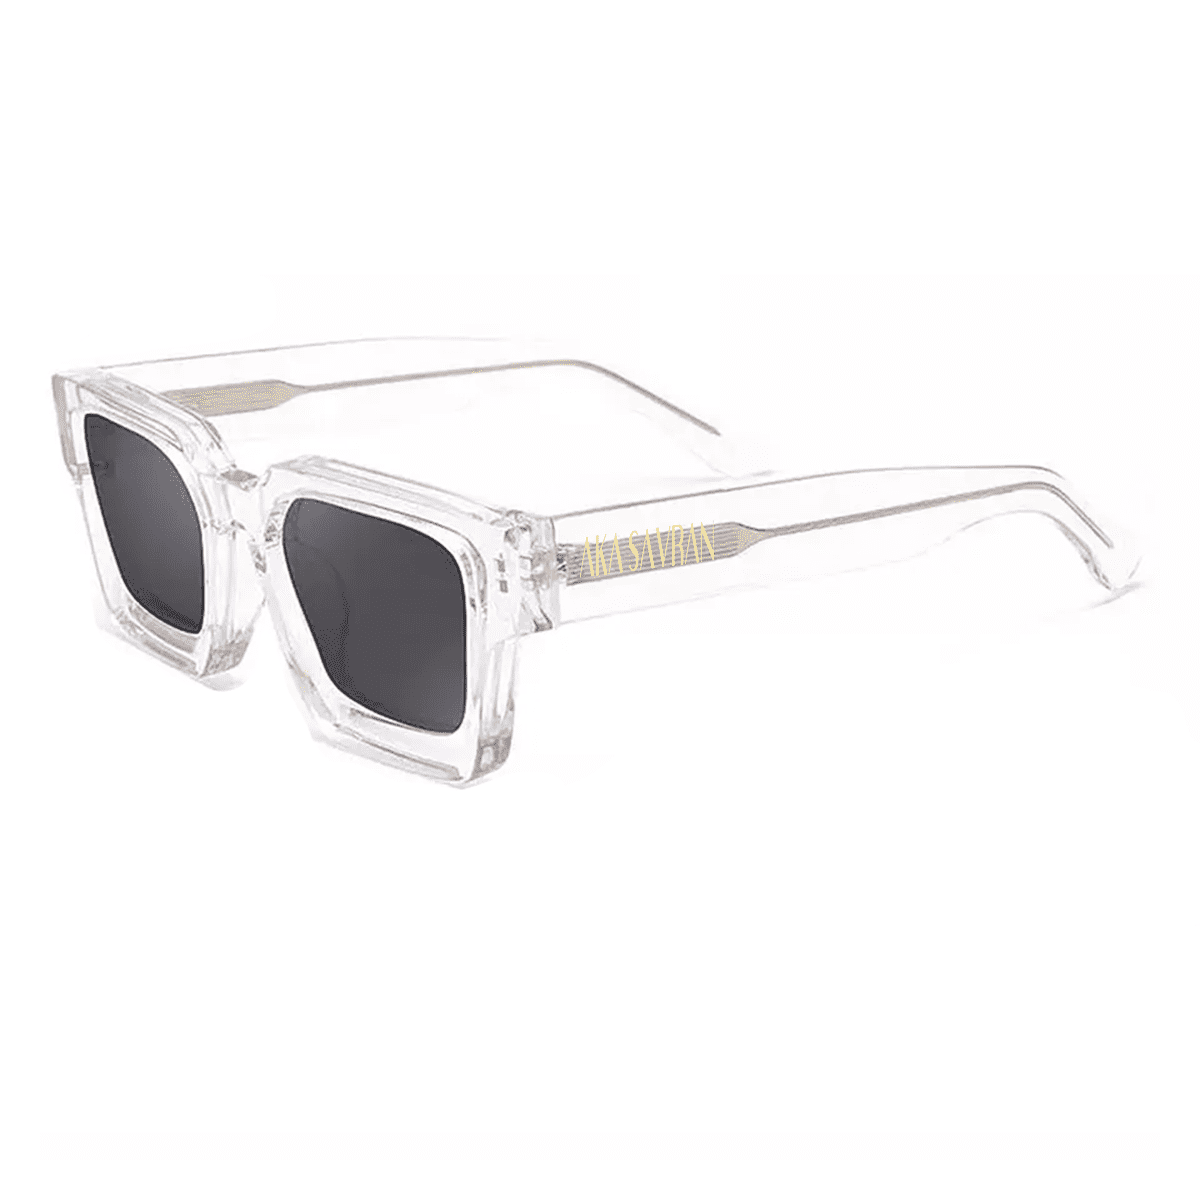 Rebel Transparante, luxe vierkante zonnebril van AKA SAVRAN, geïnspireerd door Virgil Abloh en gemaakt van acetaat